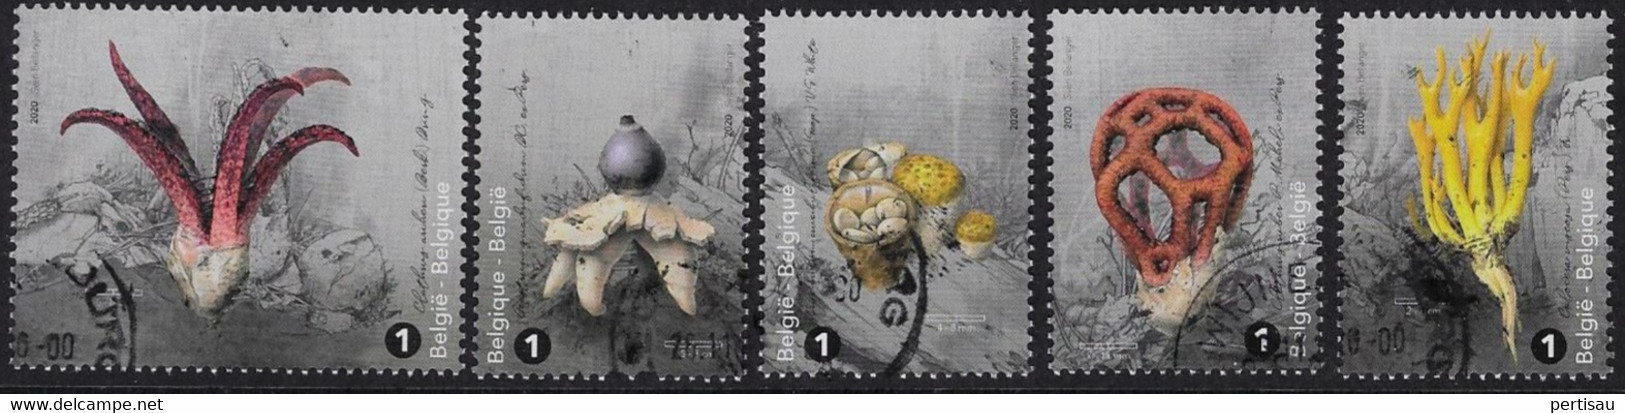 Paddestoelen 2020 - Used Stamps